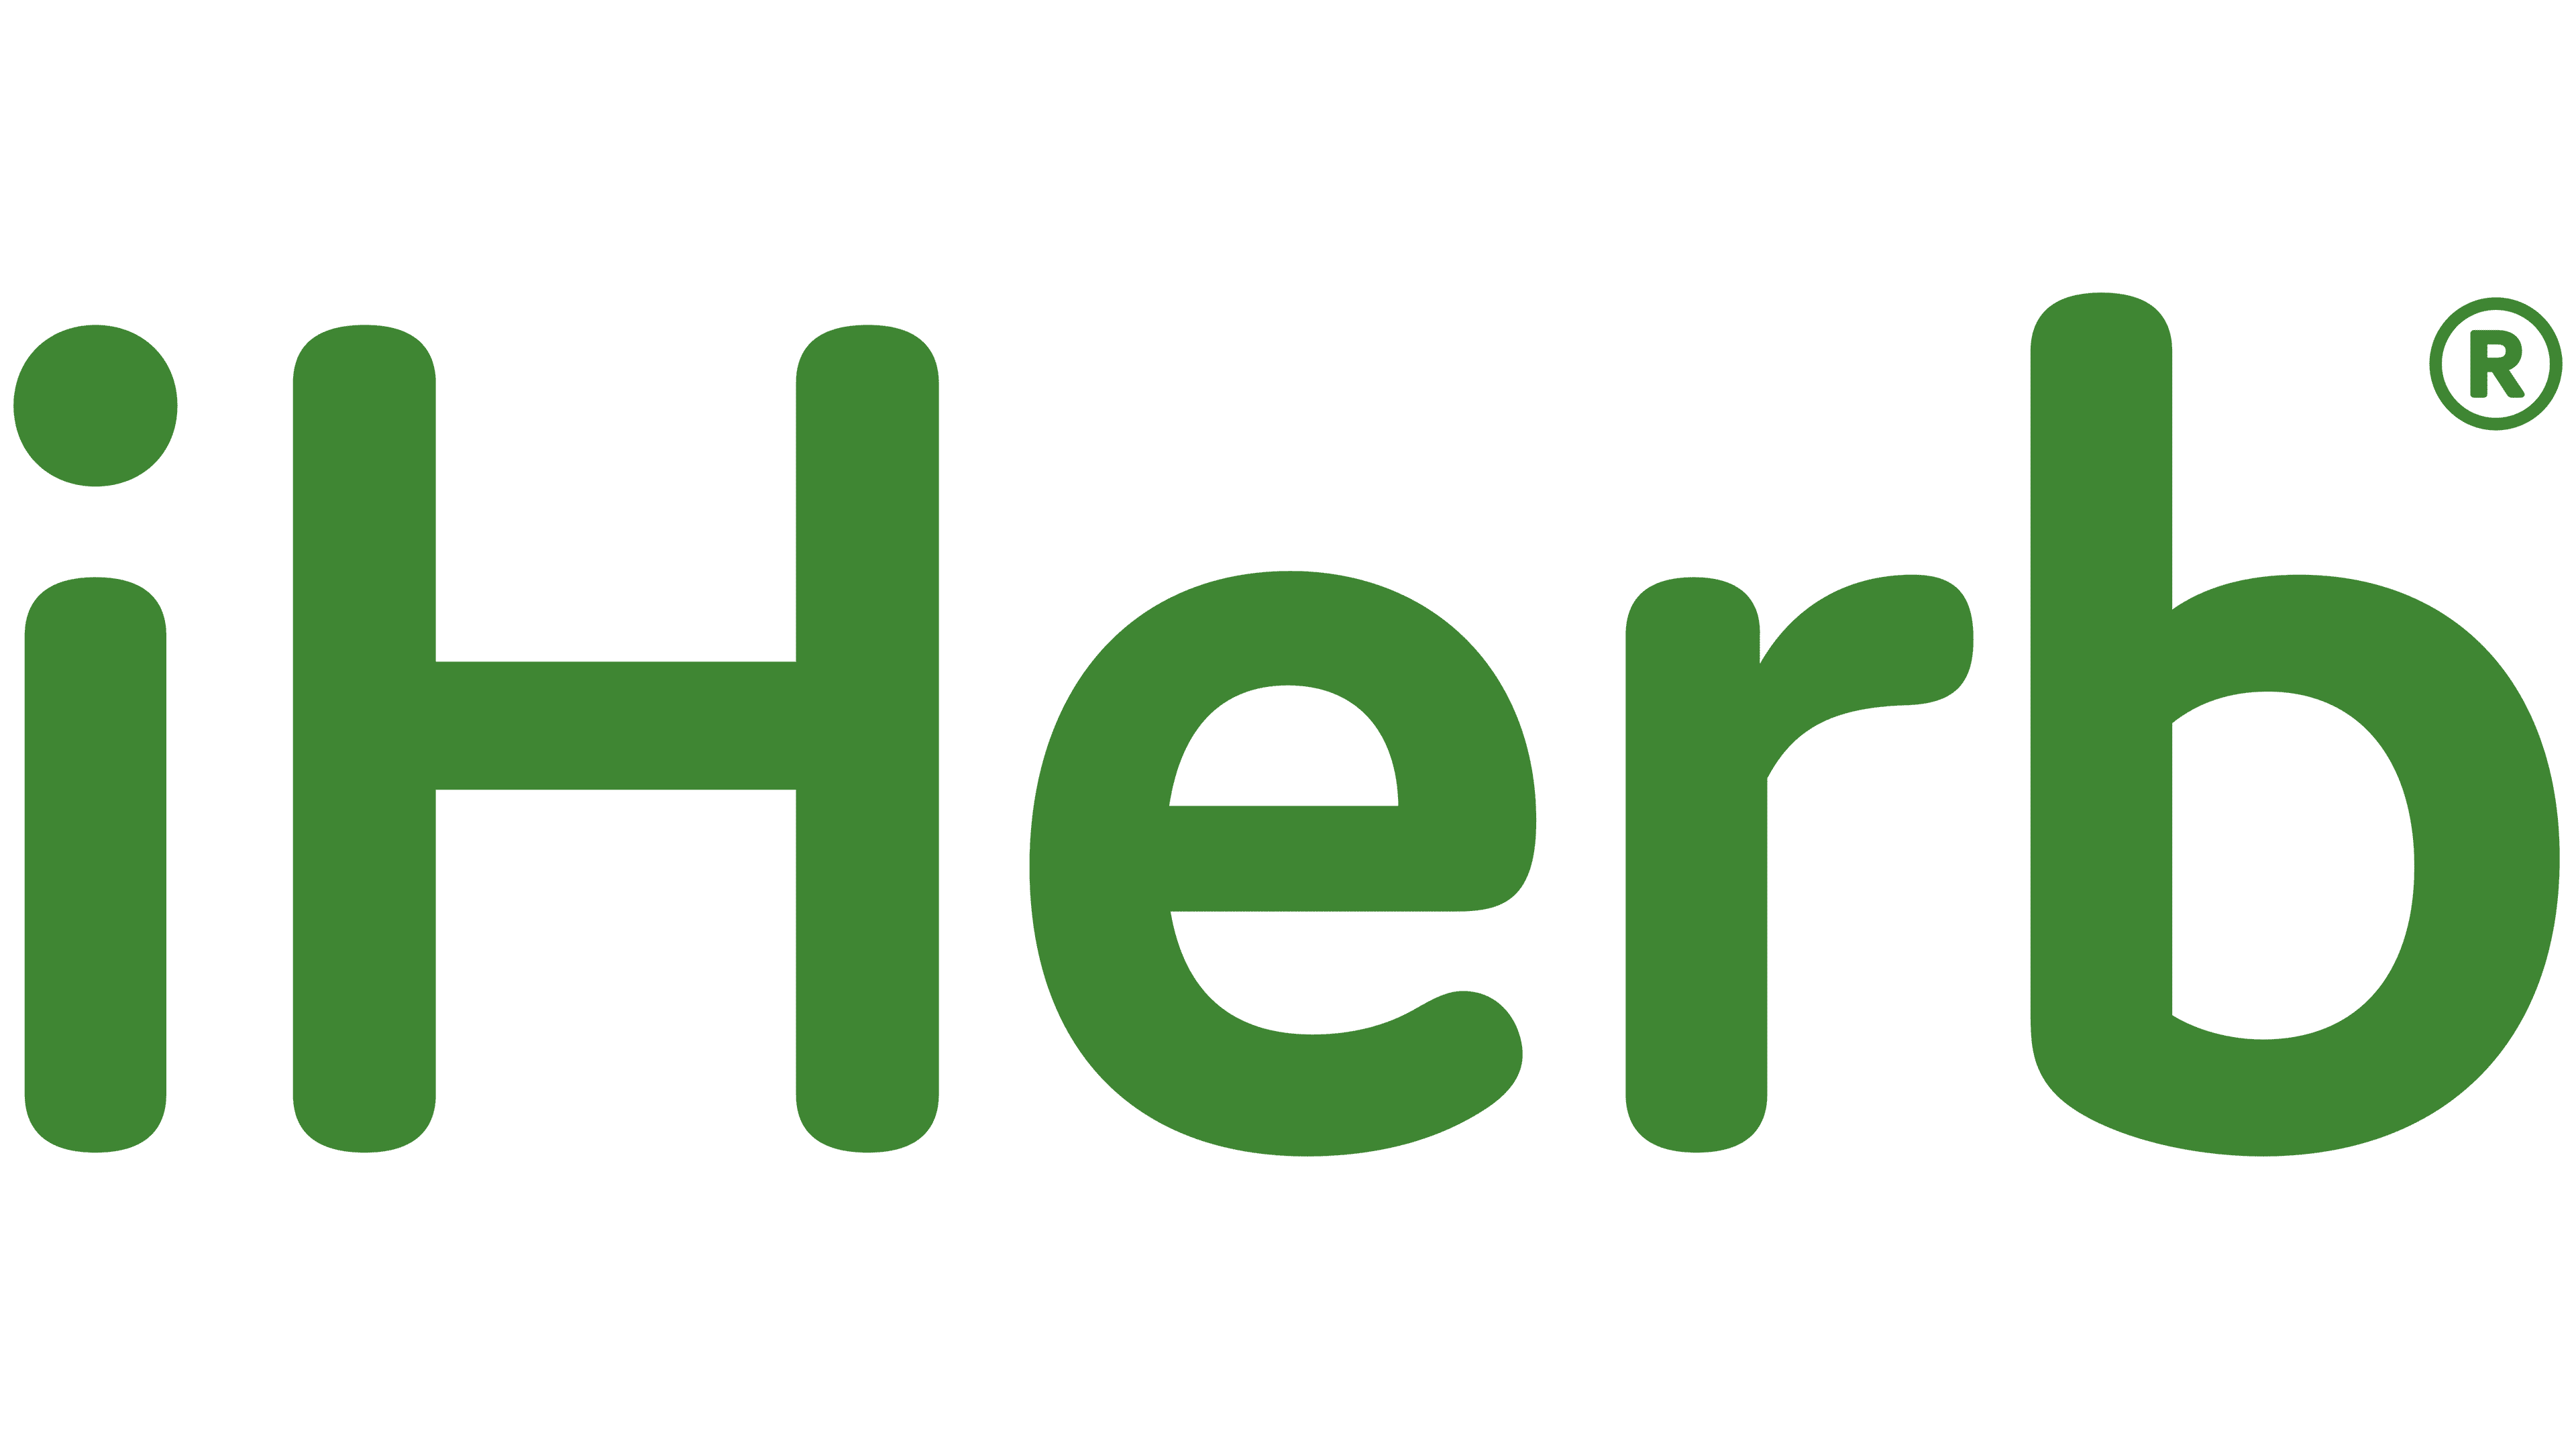 iHerb.com - Vitamins, Supplements & Natural Health Products